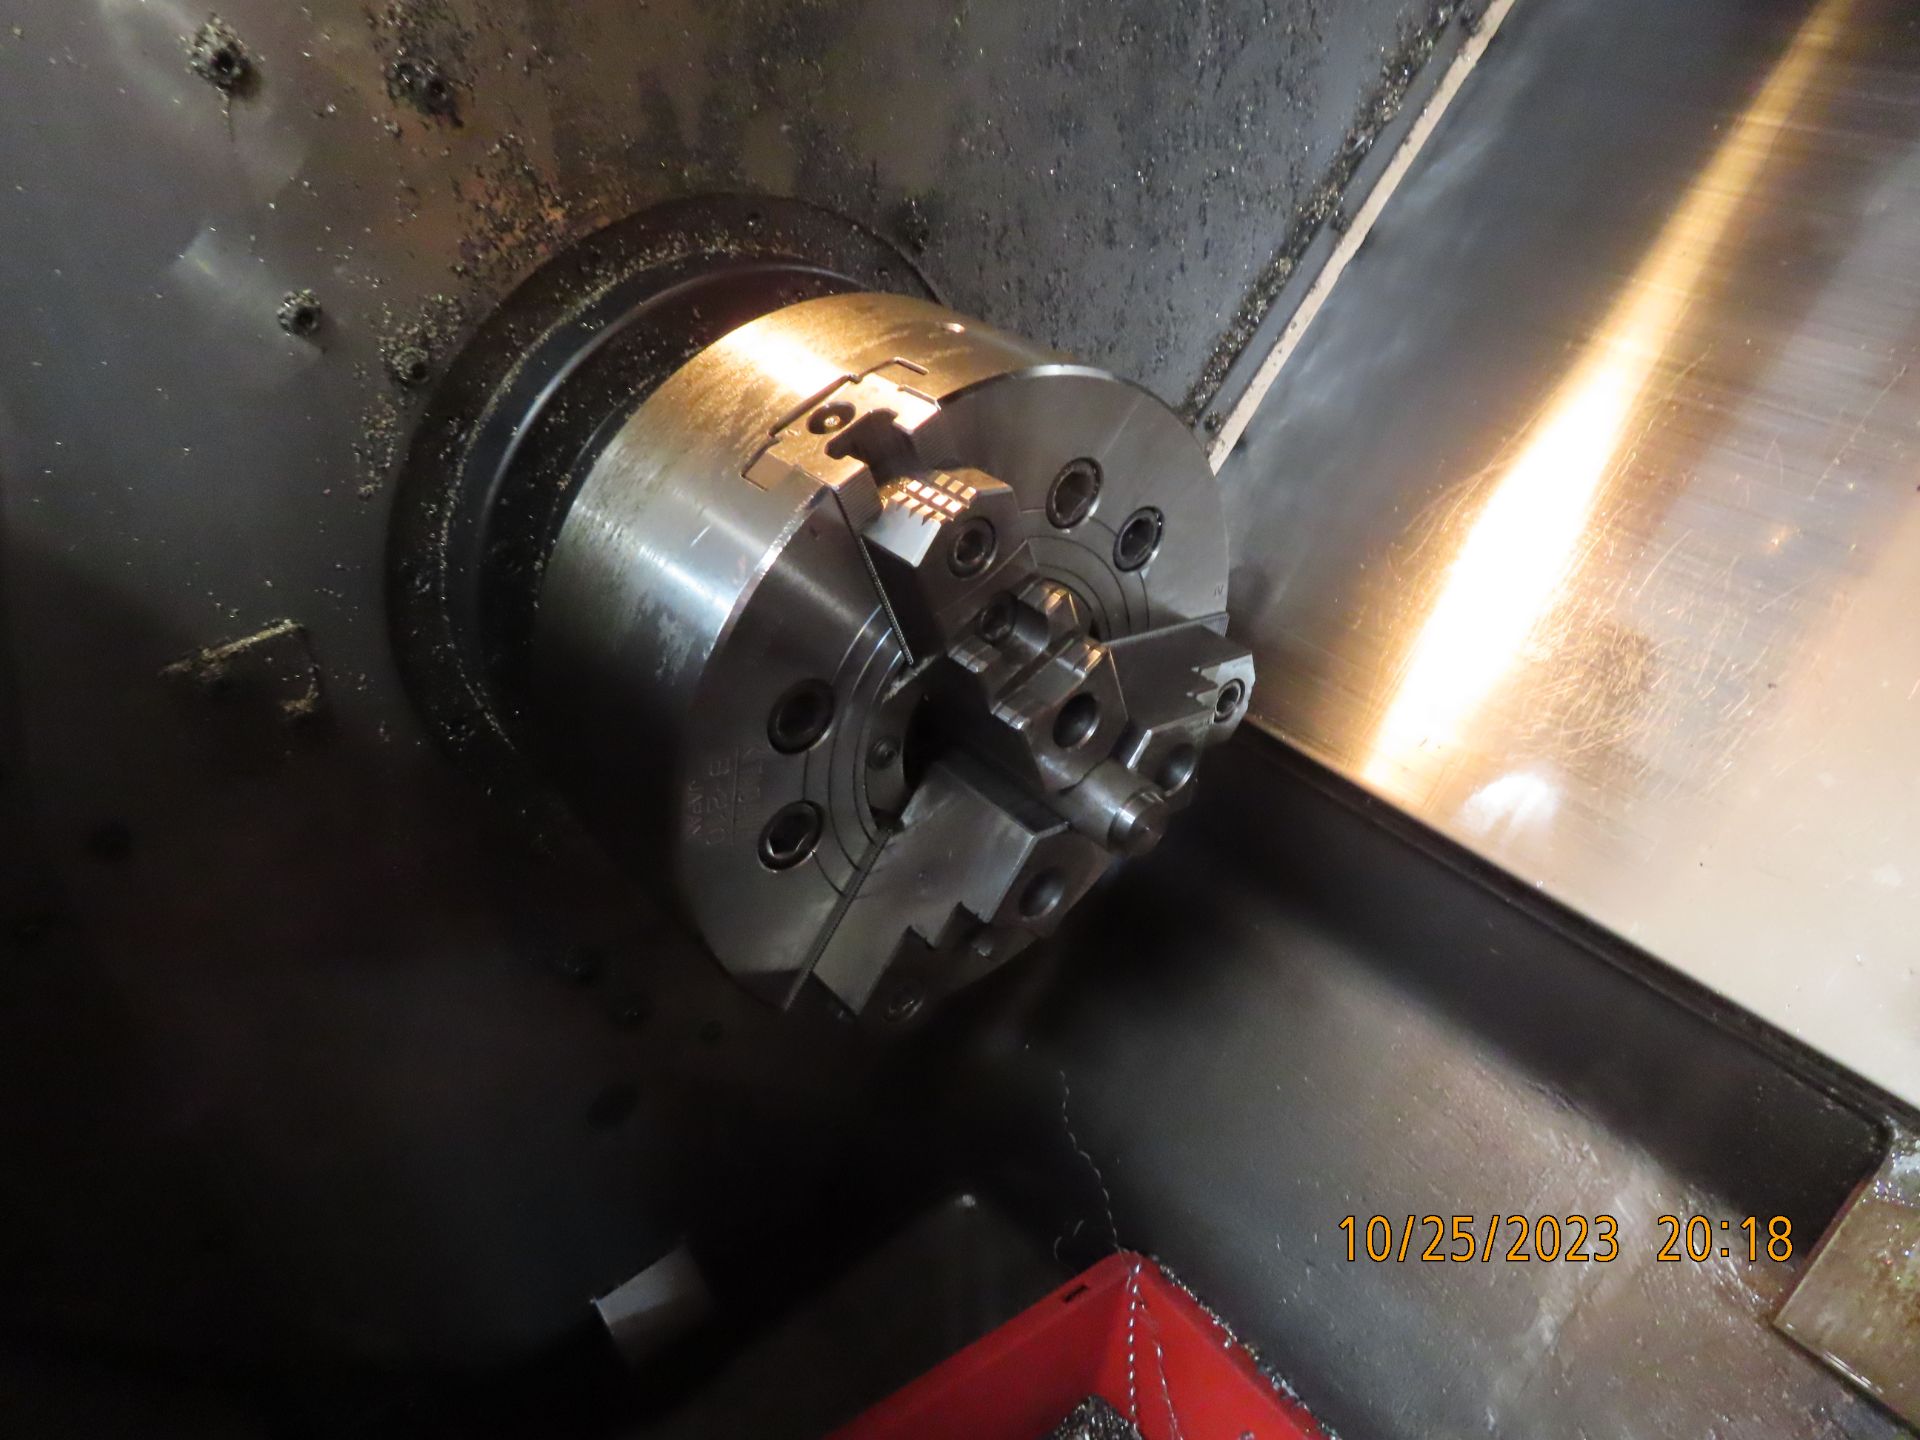 Mori Seiki mod. SL-25B5 CNC Turning Center w/ 10.7 Max Cutting Dia., 20.86 Max Length, 35/3500 RPM - Image 2 of 7